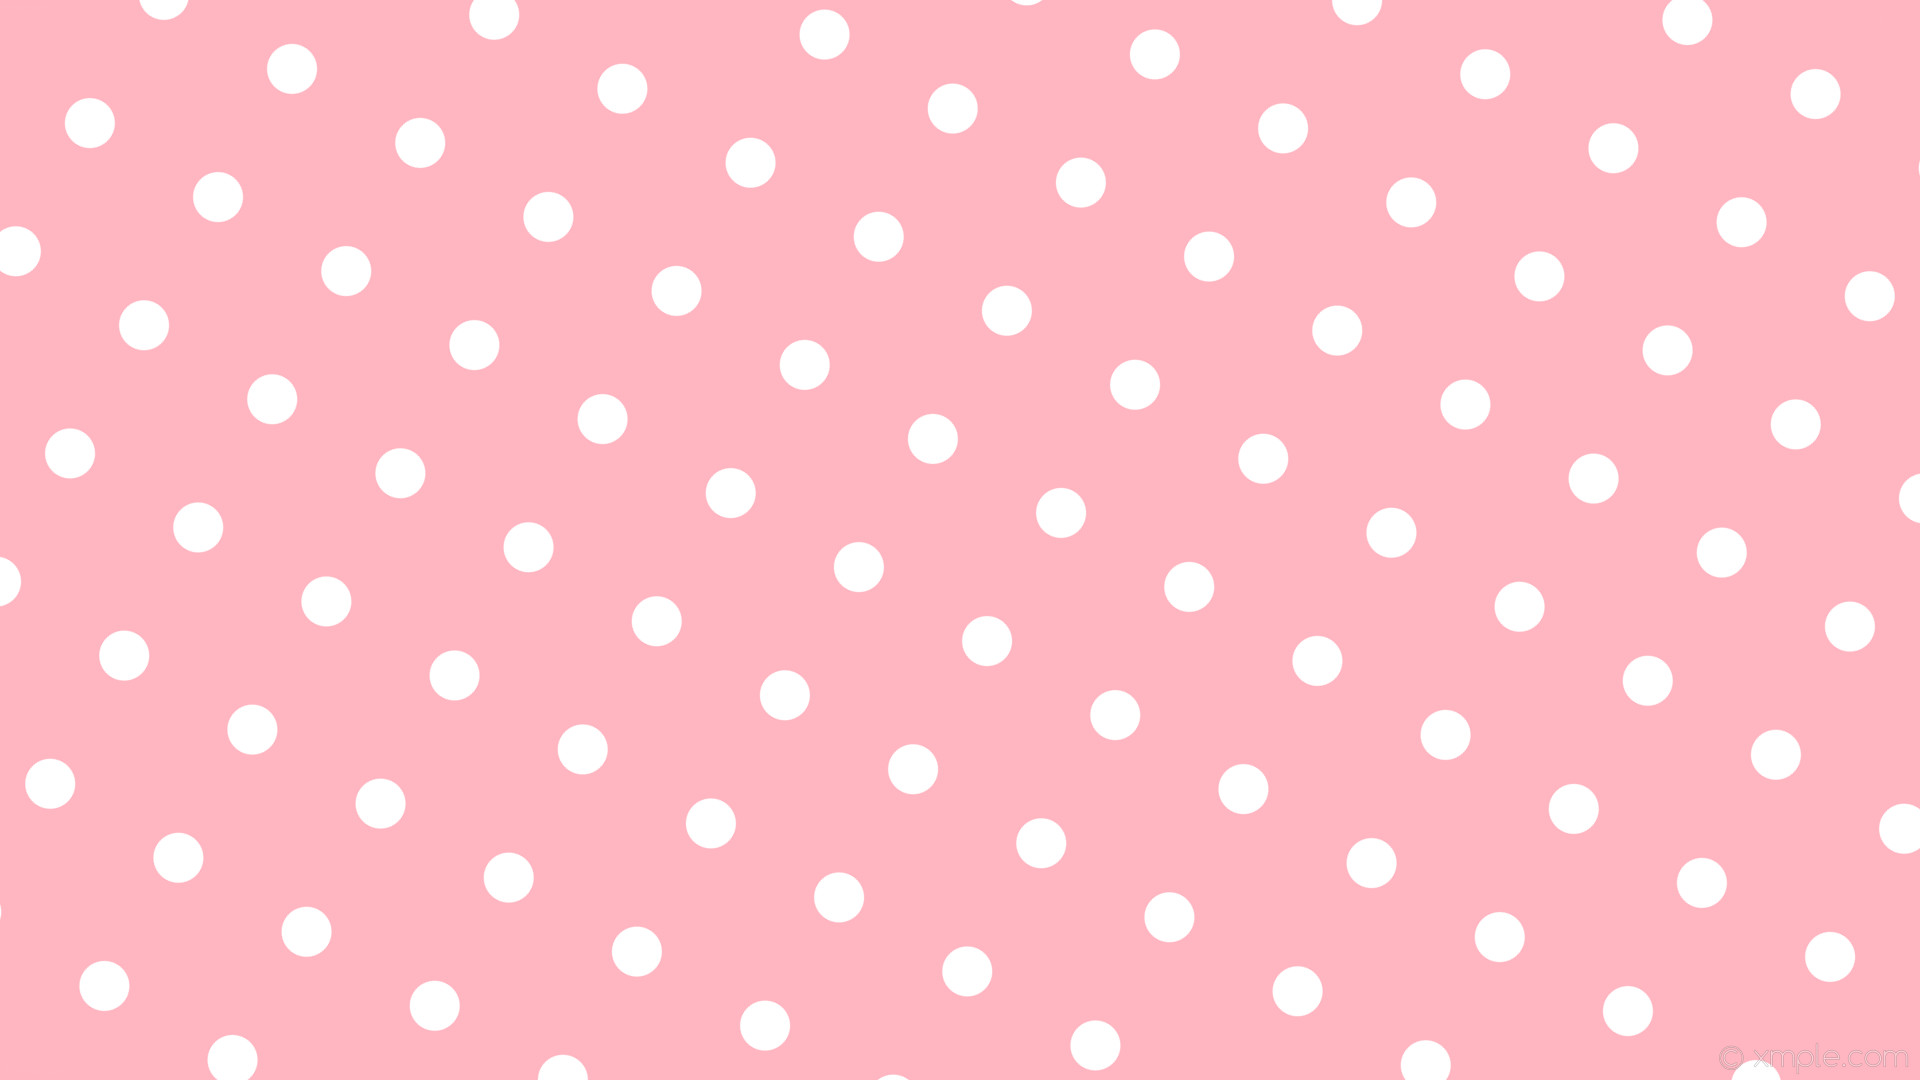 Wallpaper Pink Polka Dots Spots White Light Ffb6c1 Ffffff